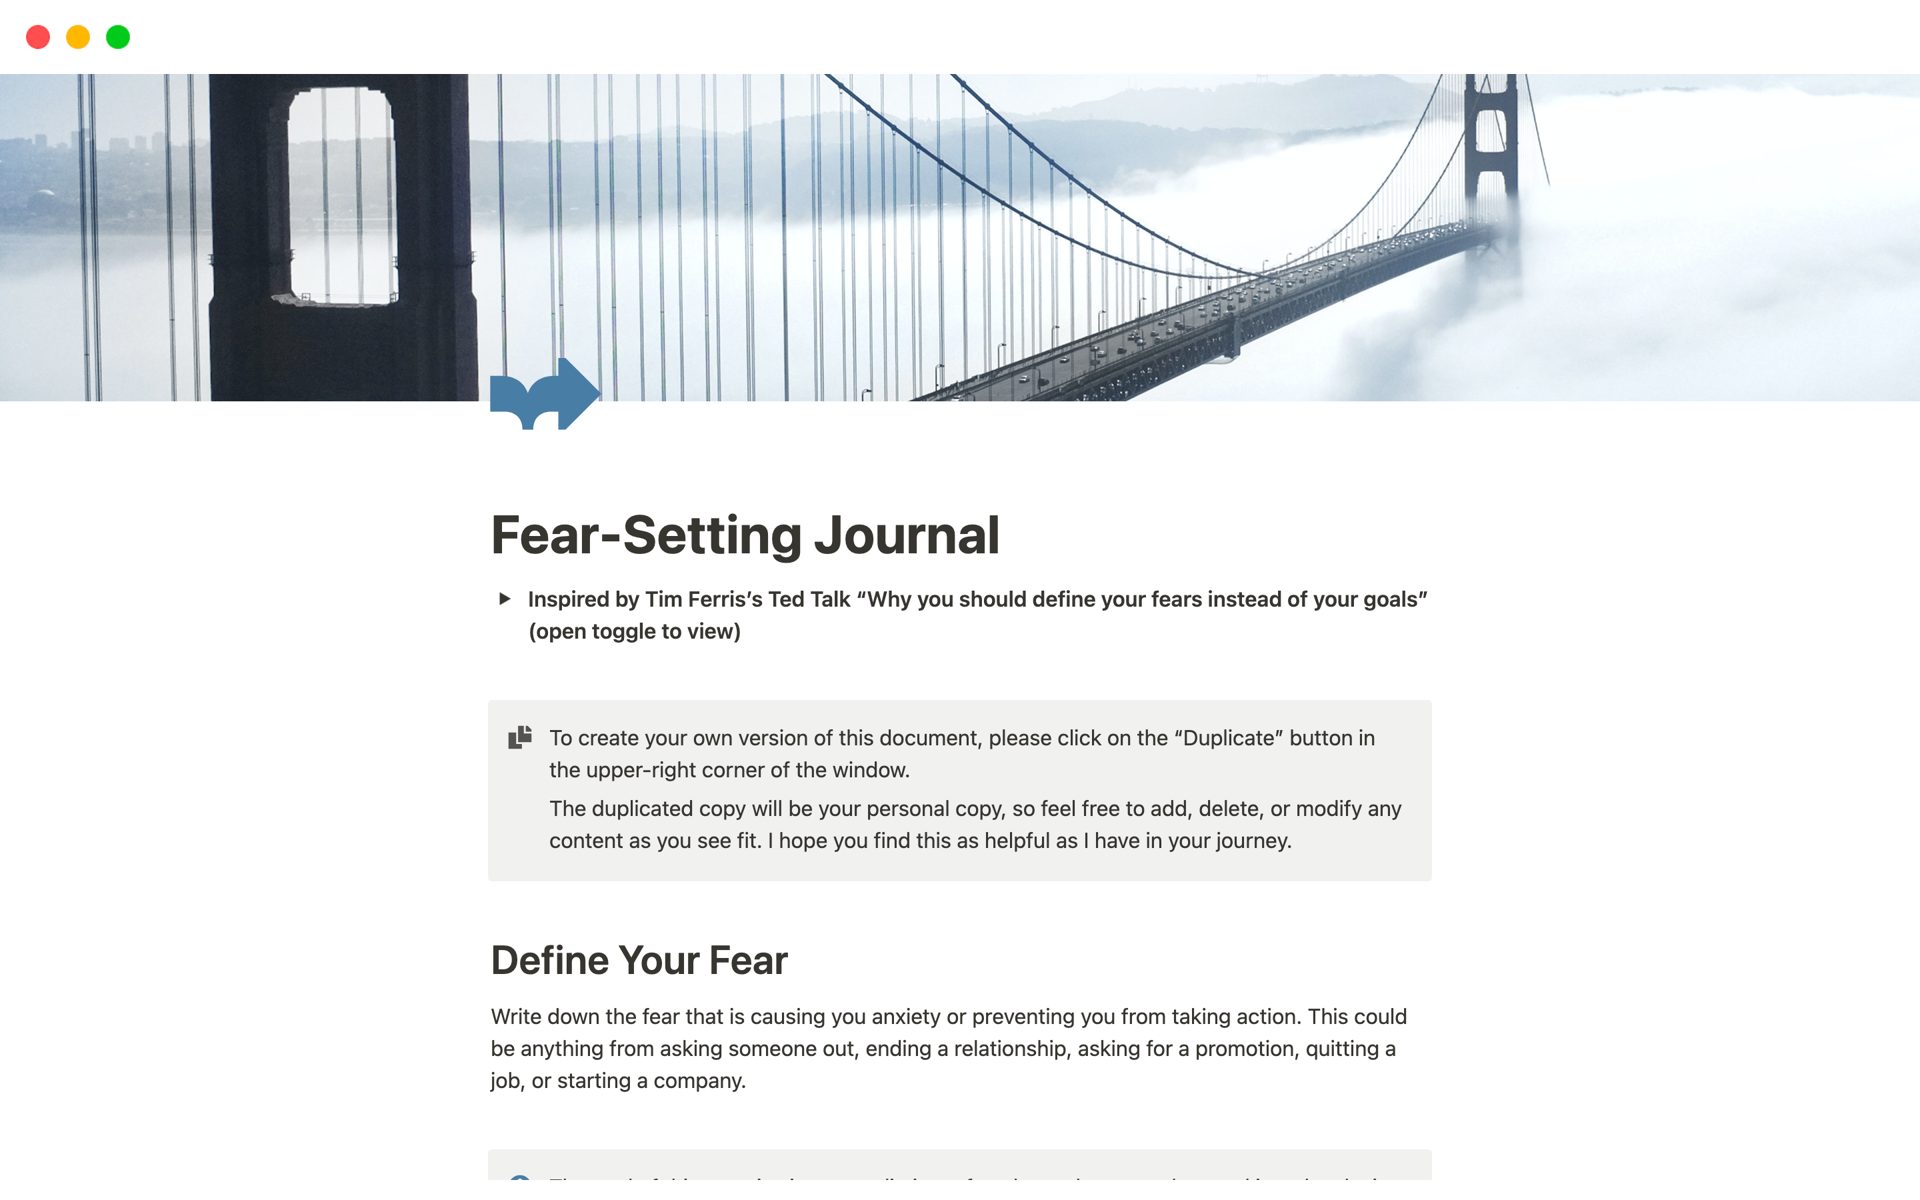 Aperçu du modèle de Fear-Setting Journal